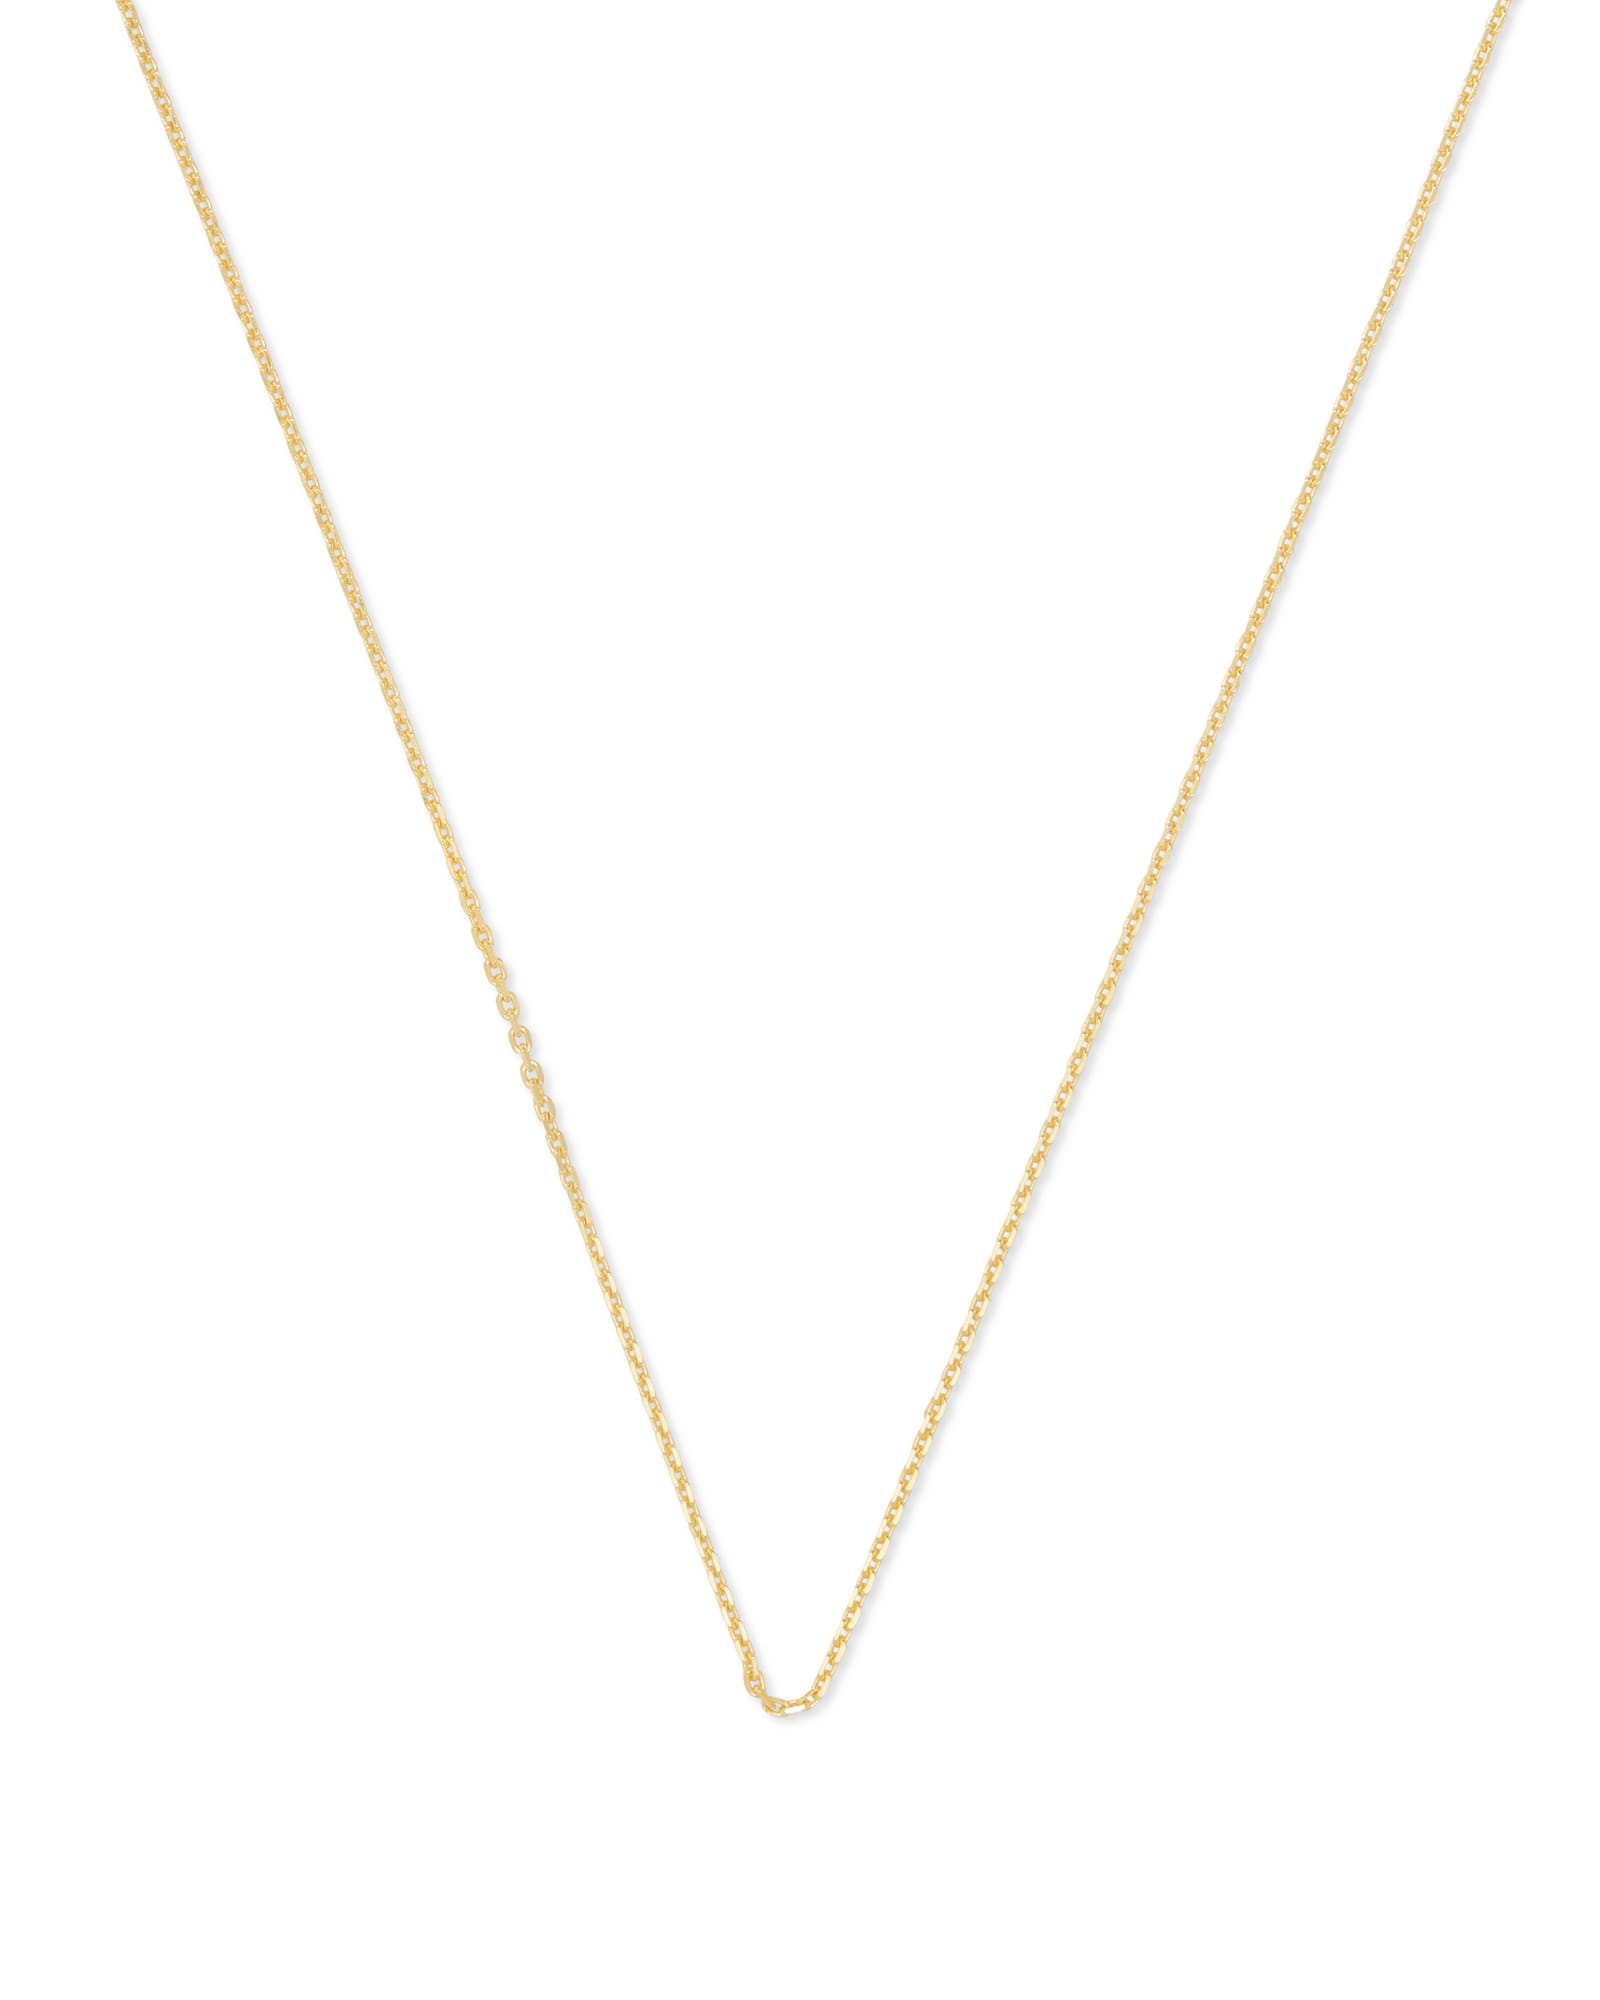 Inch Thin Chain Necklace in 18k Gold Vermeil